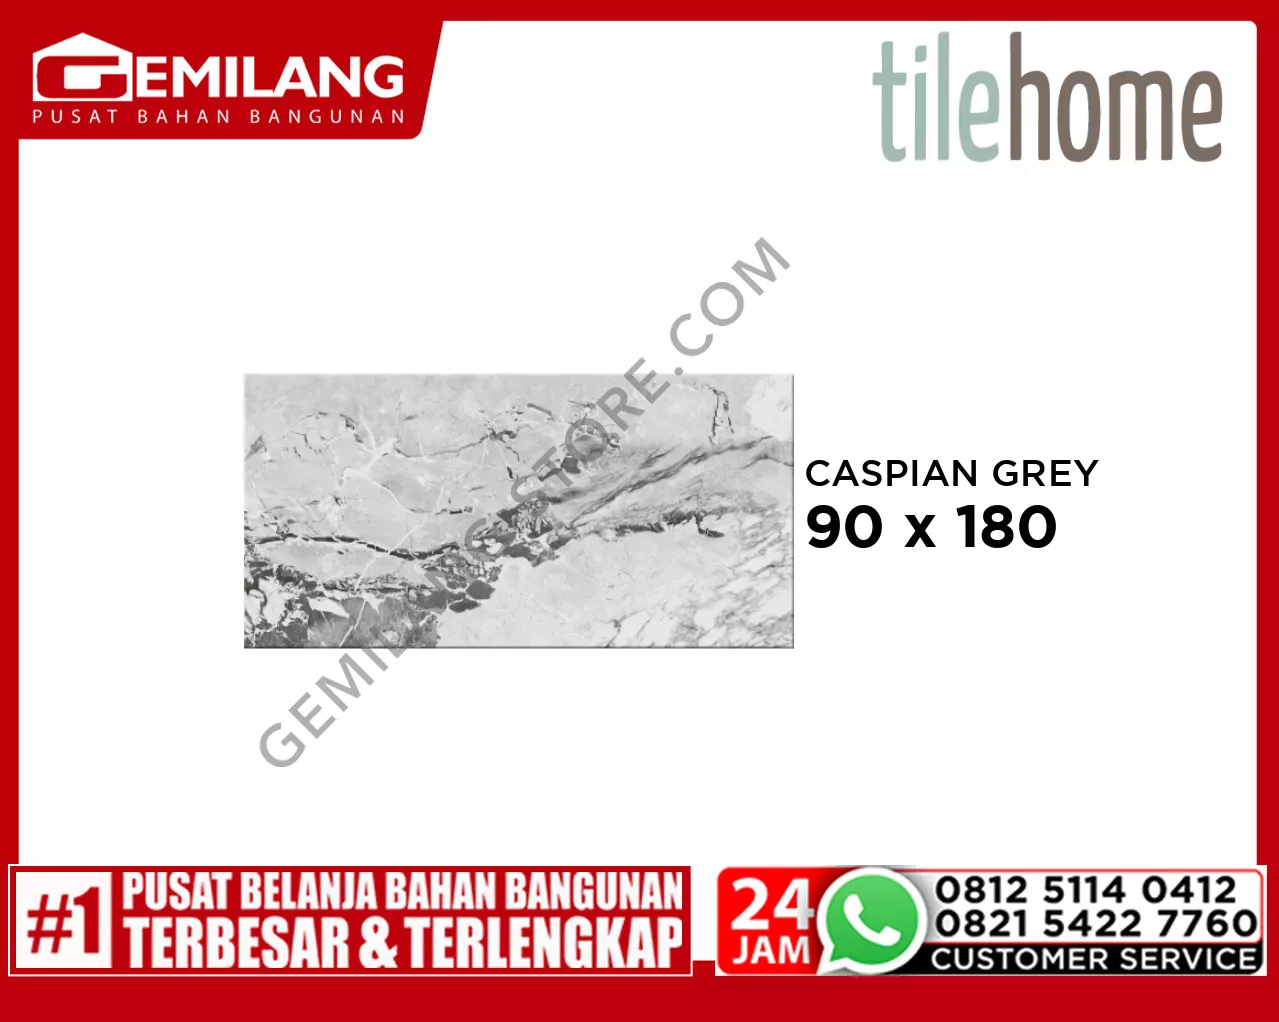 TILEHOME GRANIT CASPIAN GREY RK189H202B 90 x 180